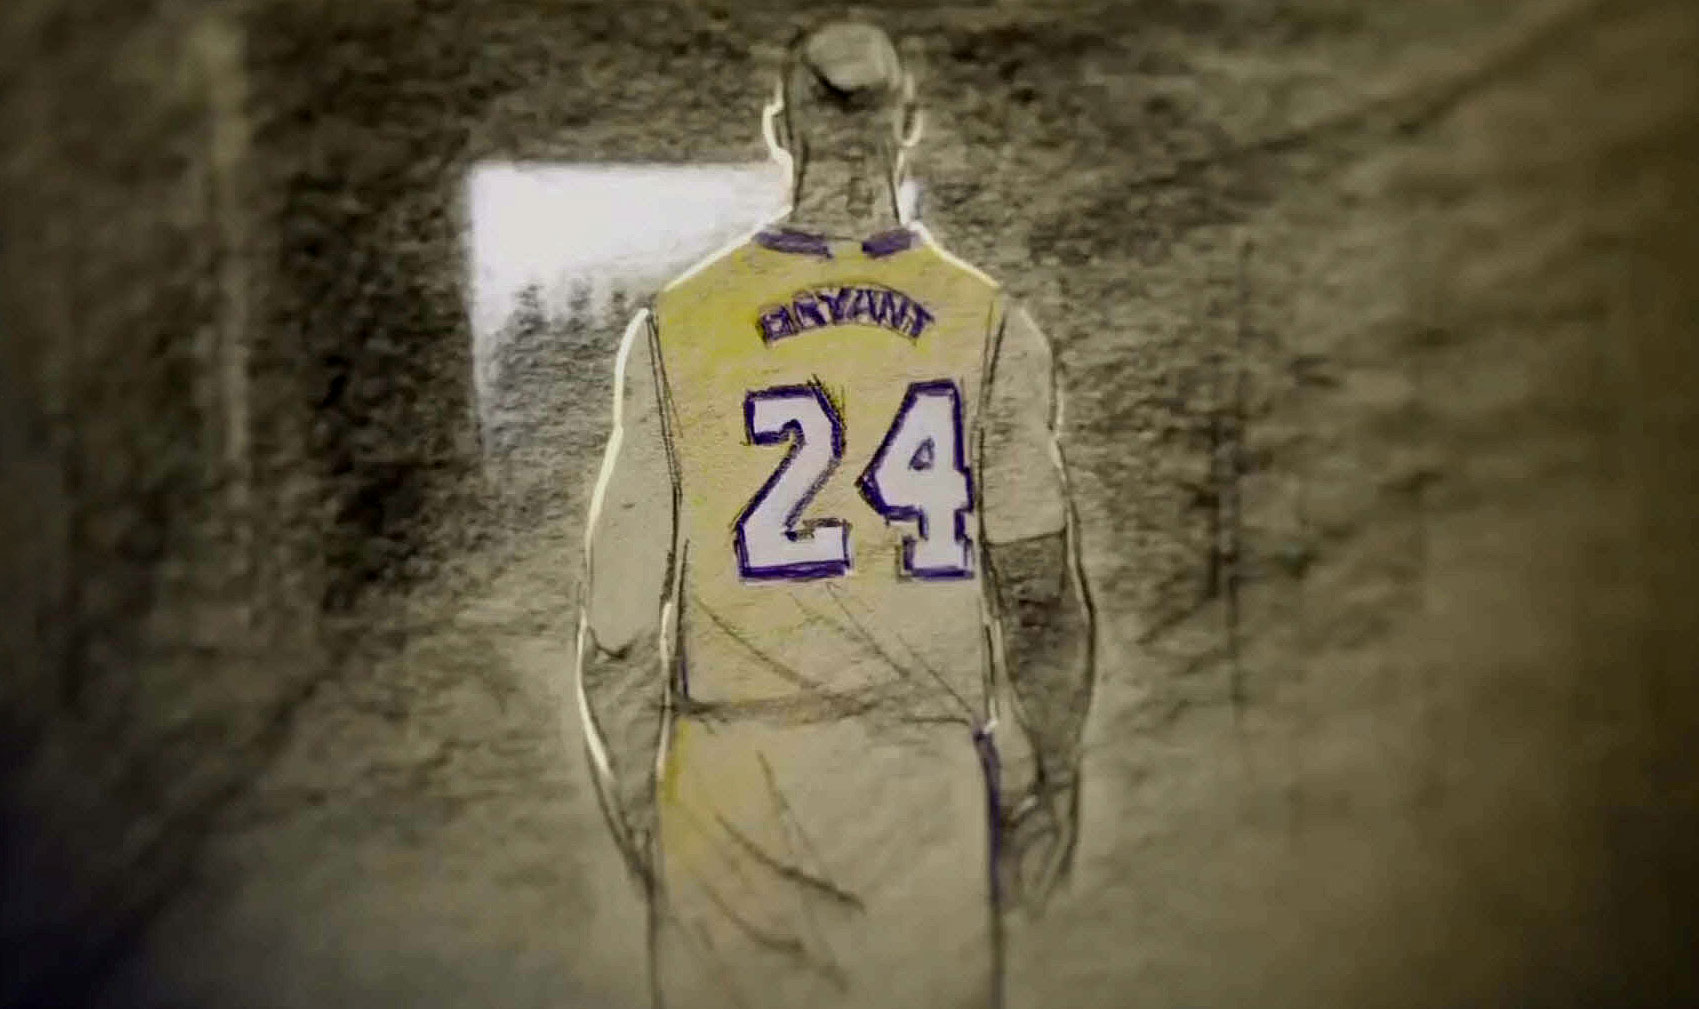 Dear Basketball, Kobe Bryant Short Animated Film ** REST UP KING **, Dear  Basketball